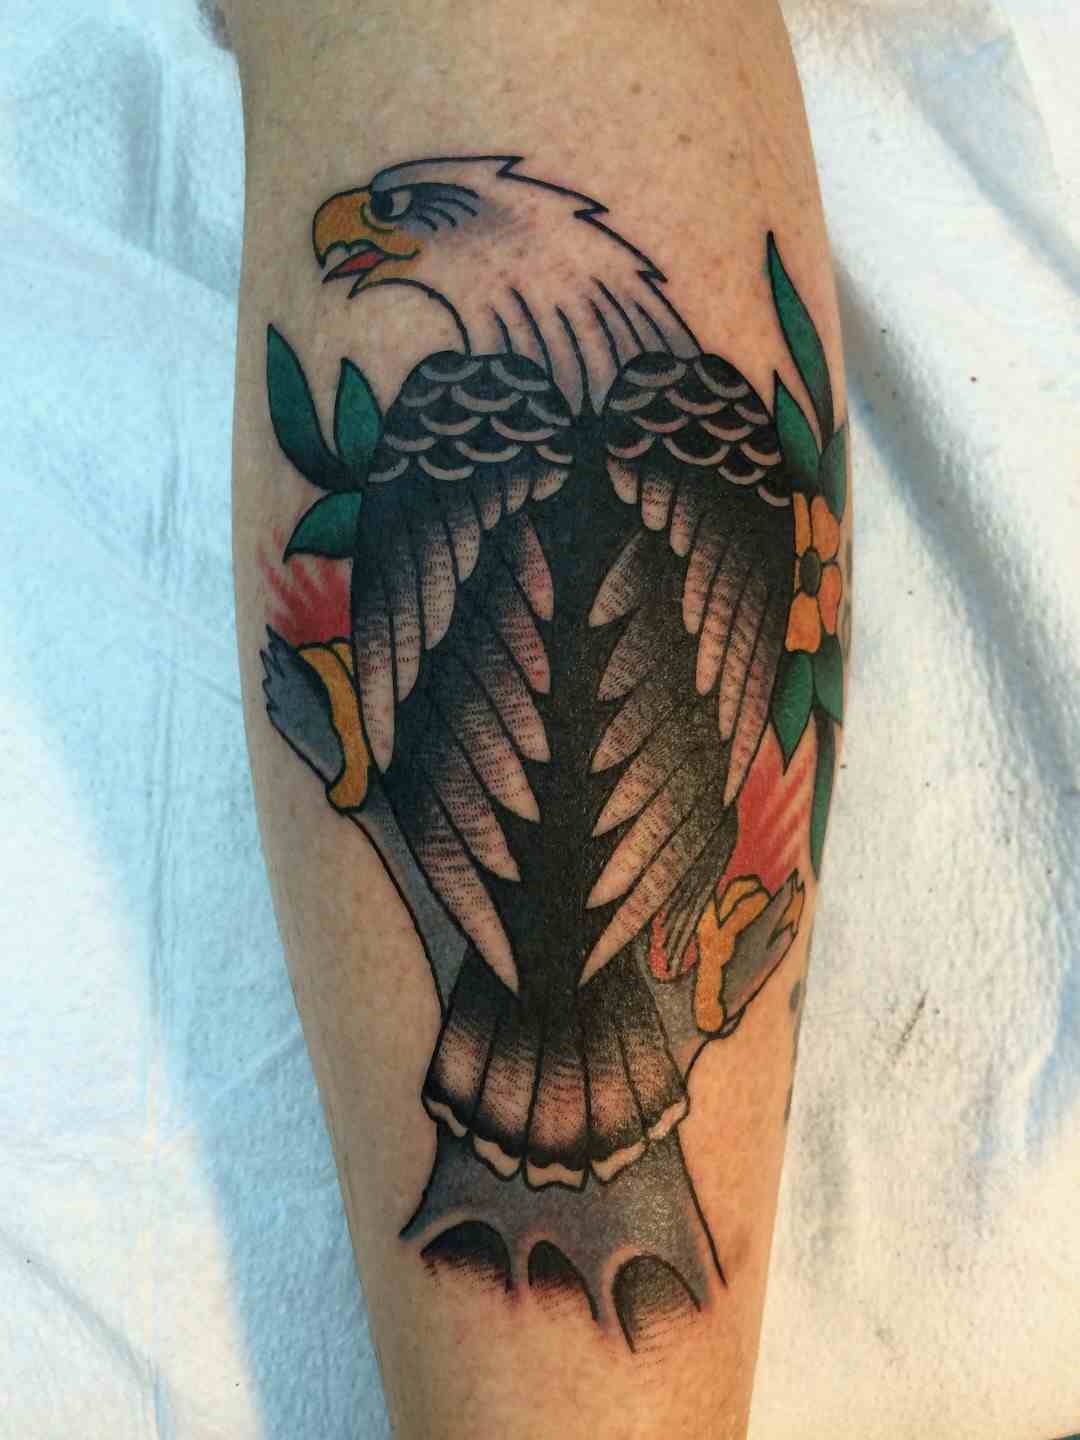 Bowling pin eagle tattoo